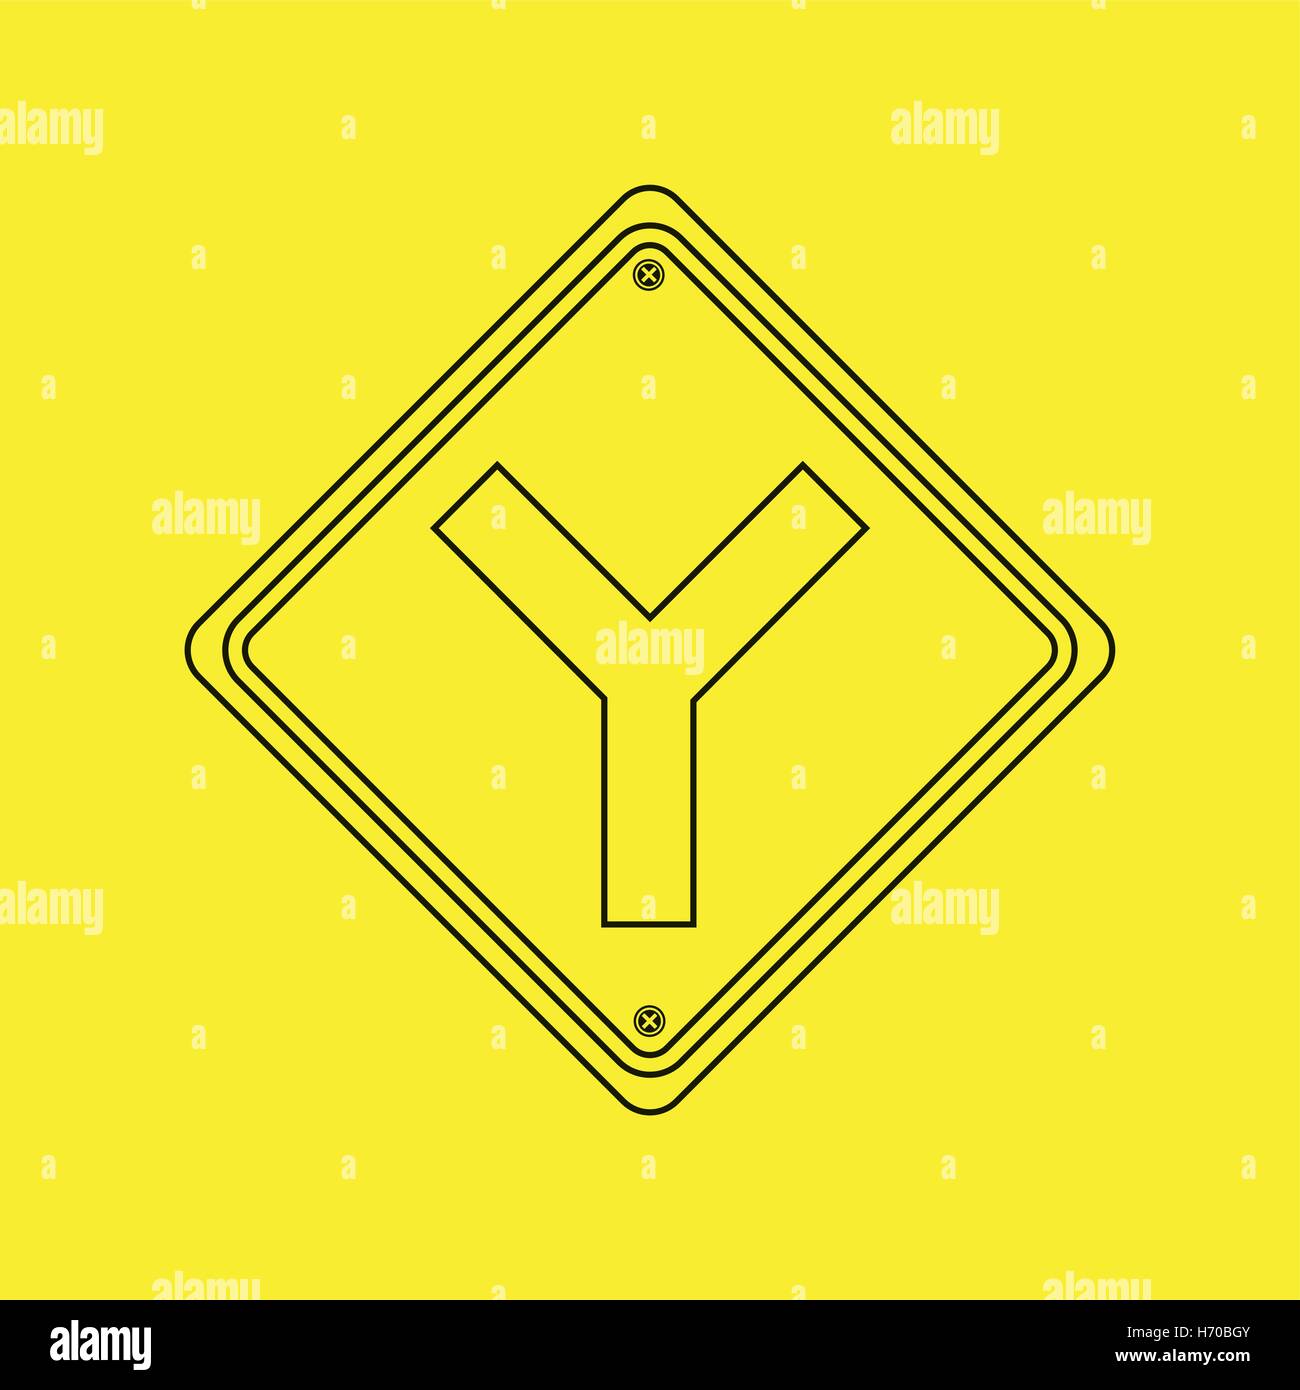 signal traffic yellow icon graphic vector illustration eps 10 Stock Vector